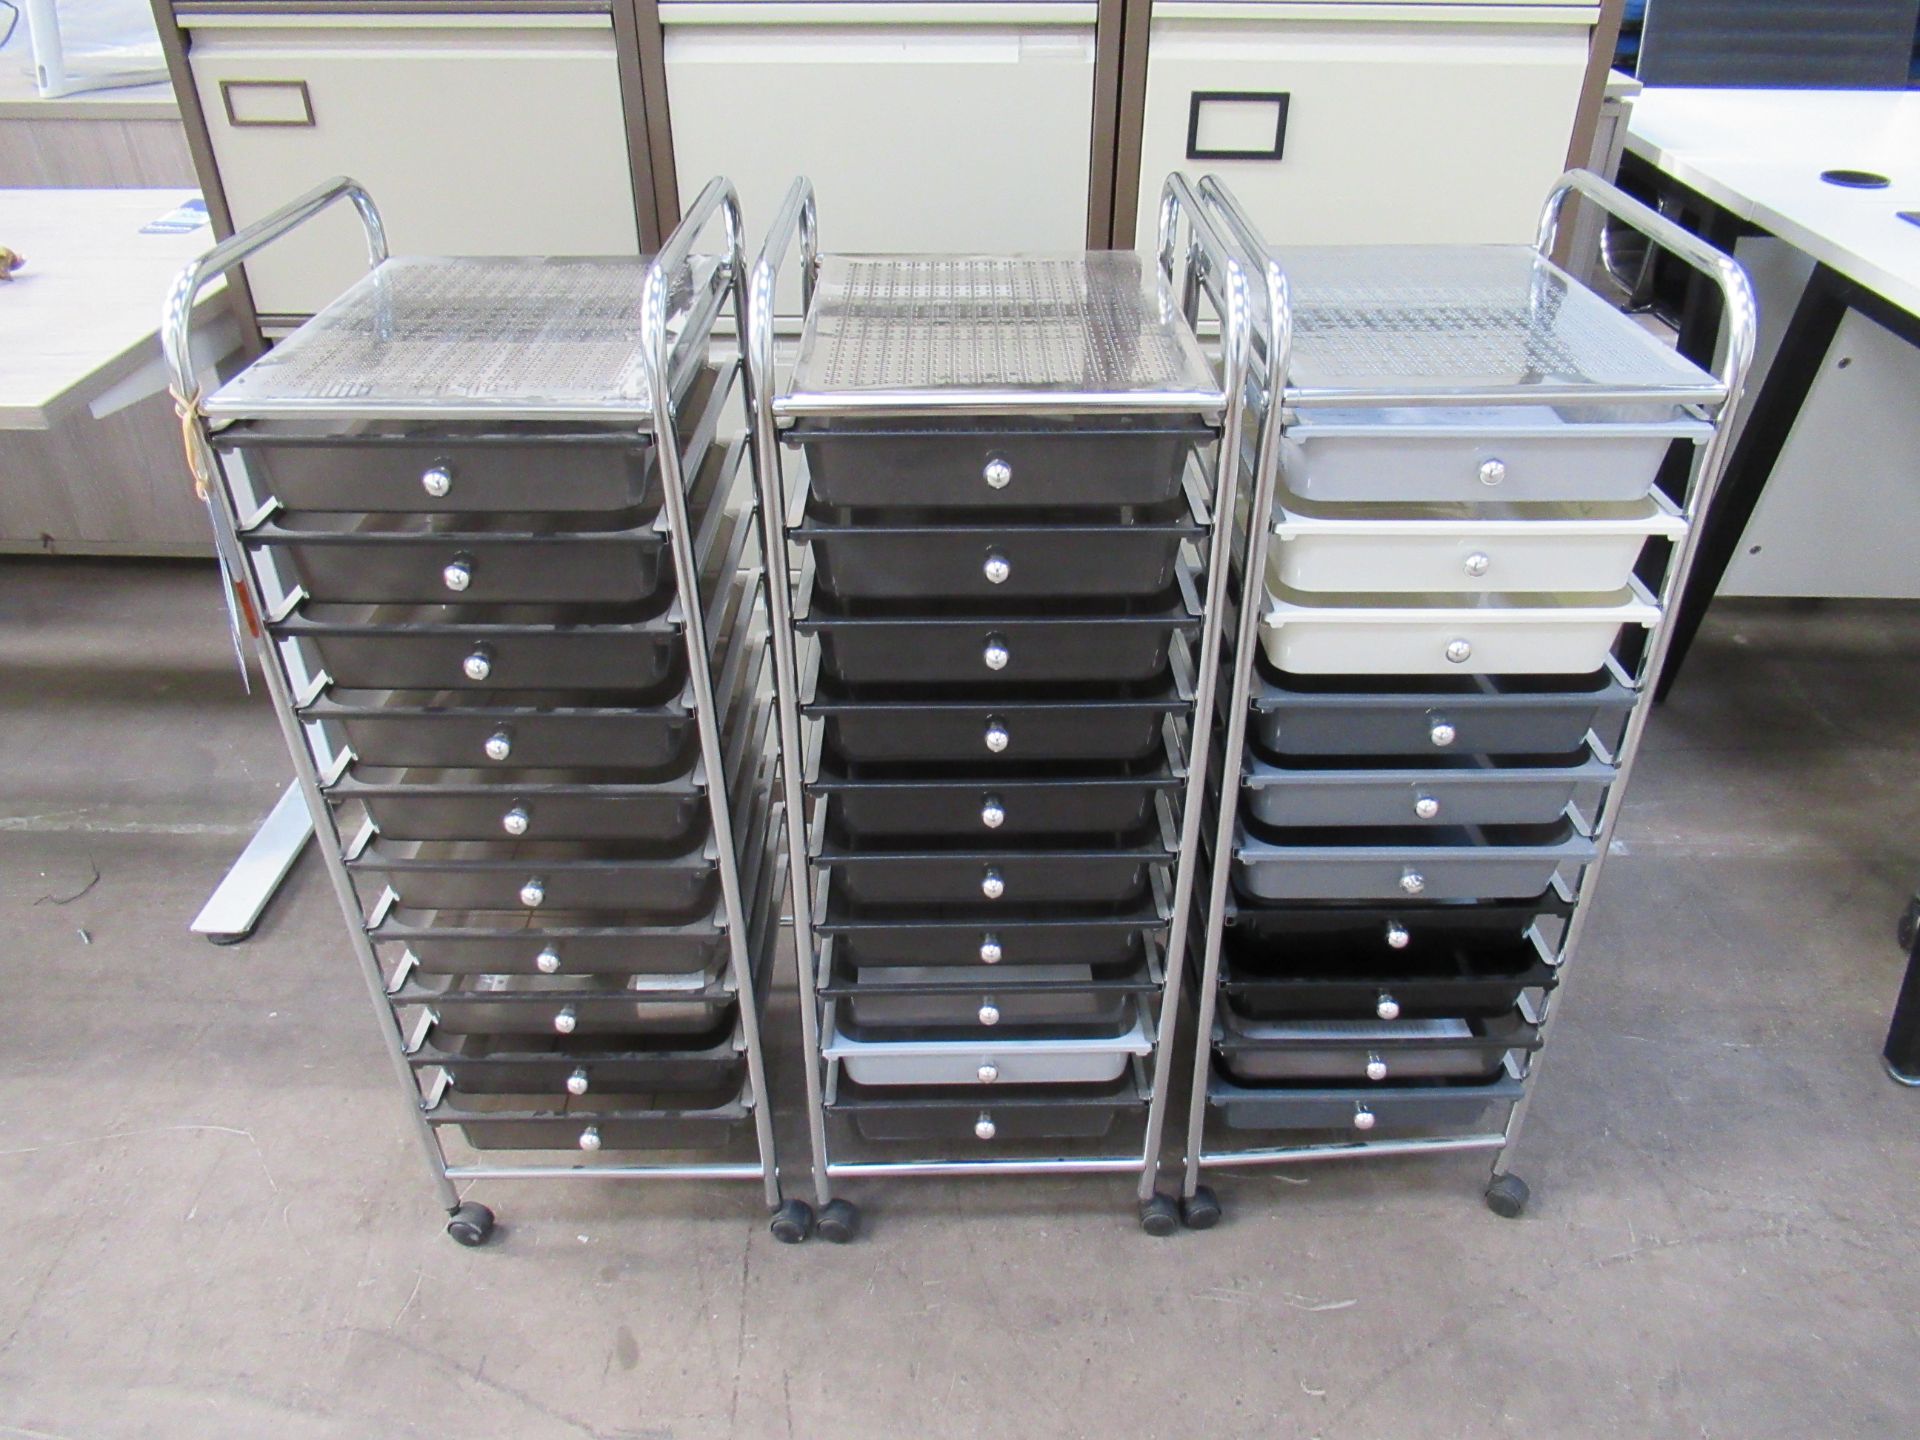 3 x Chrome Metal Mobile Ten Tray Storage units